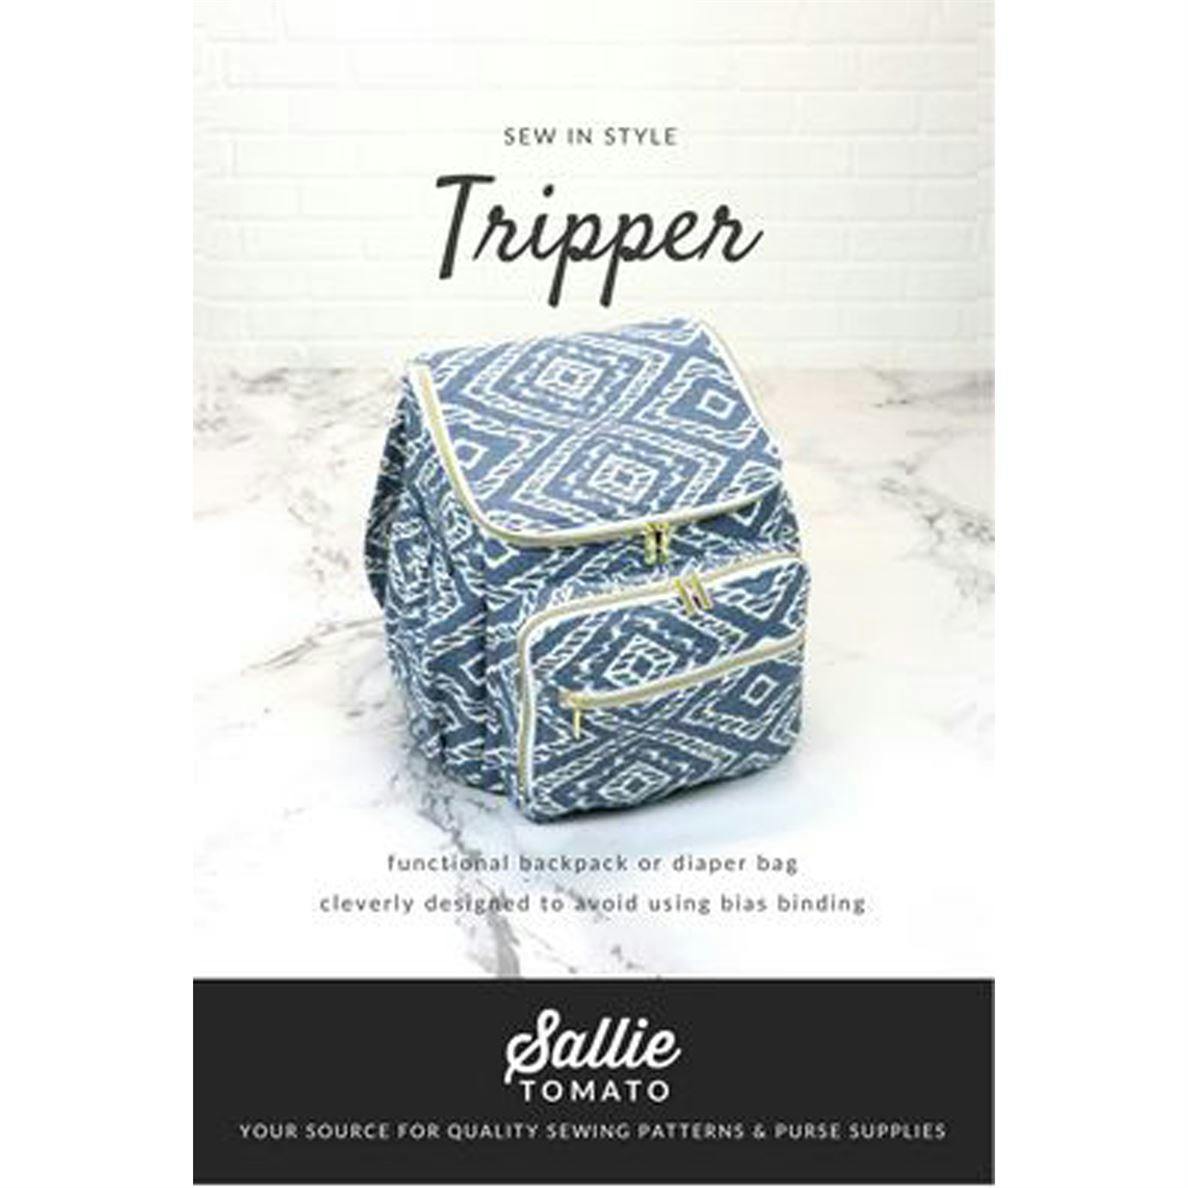 Sallie Tomato Tripper backpack